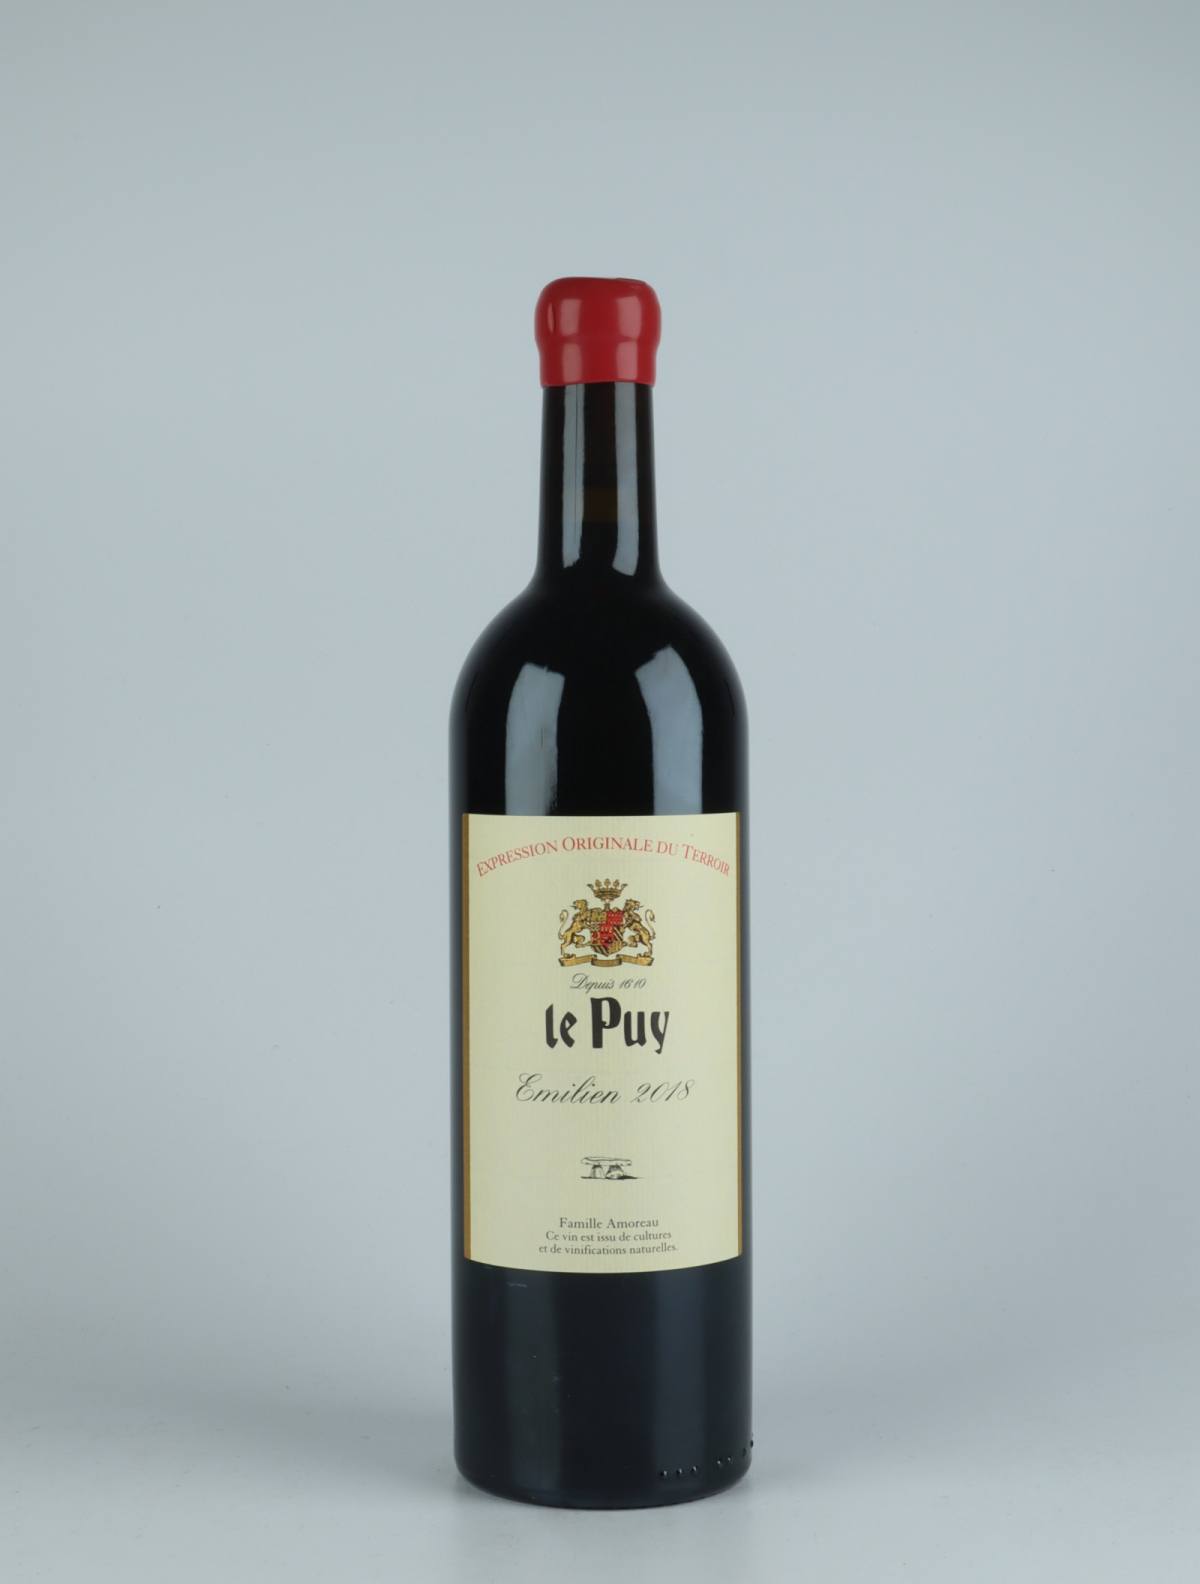 A bottle 2018 Emilien Red wine from Château le Puy, Bordeaux in France